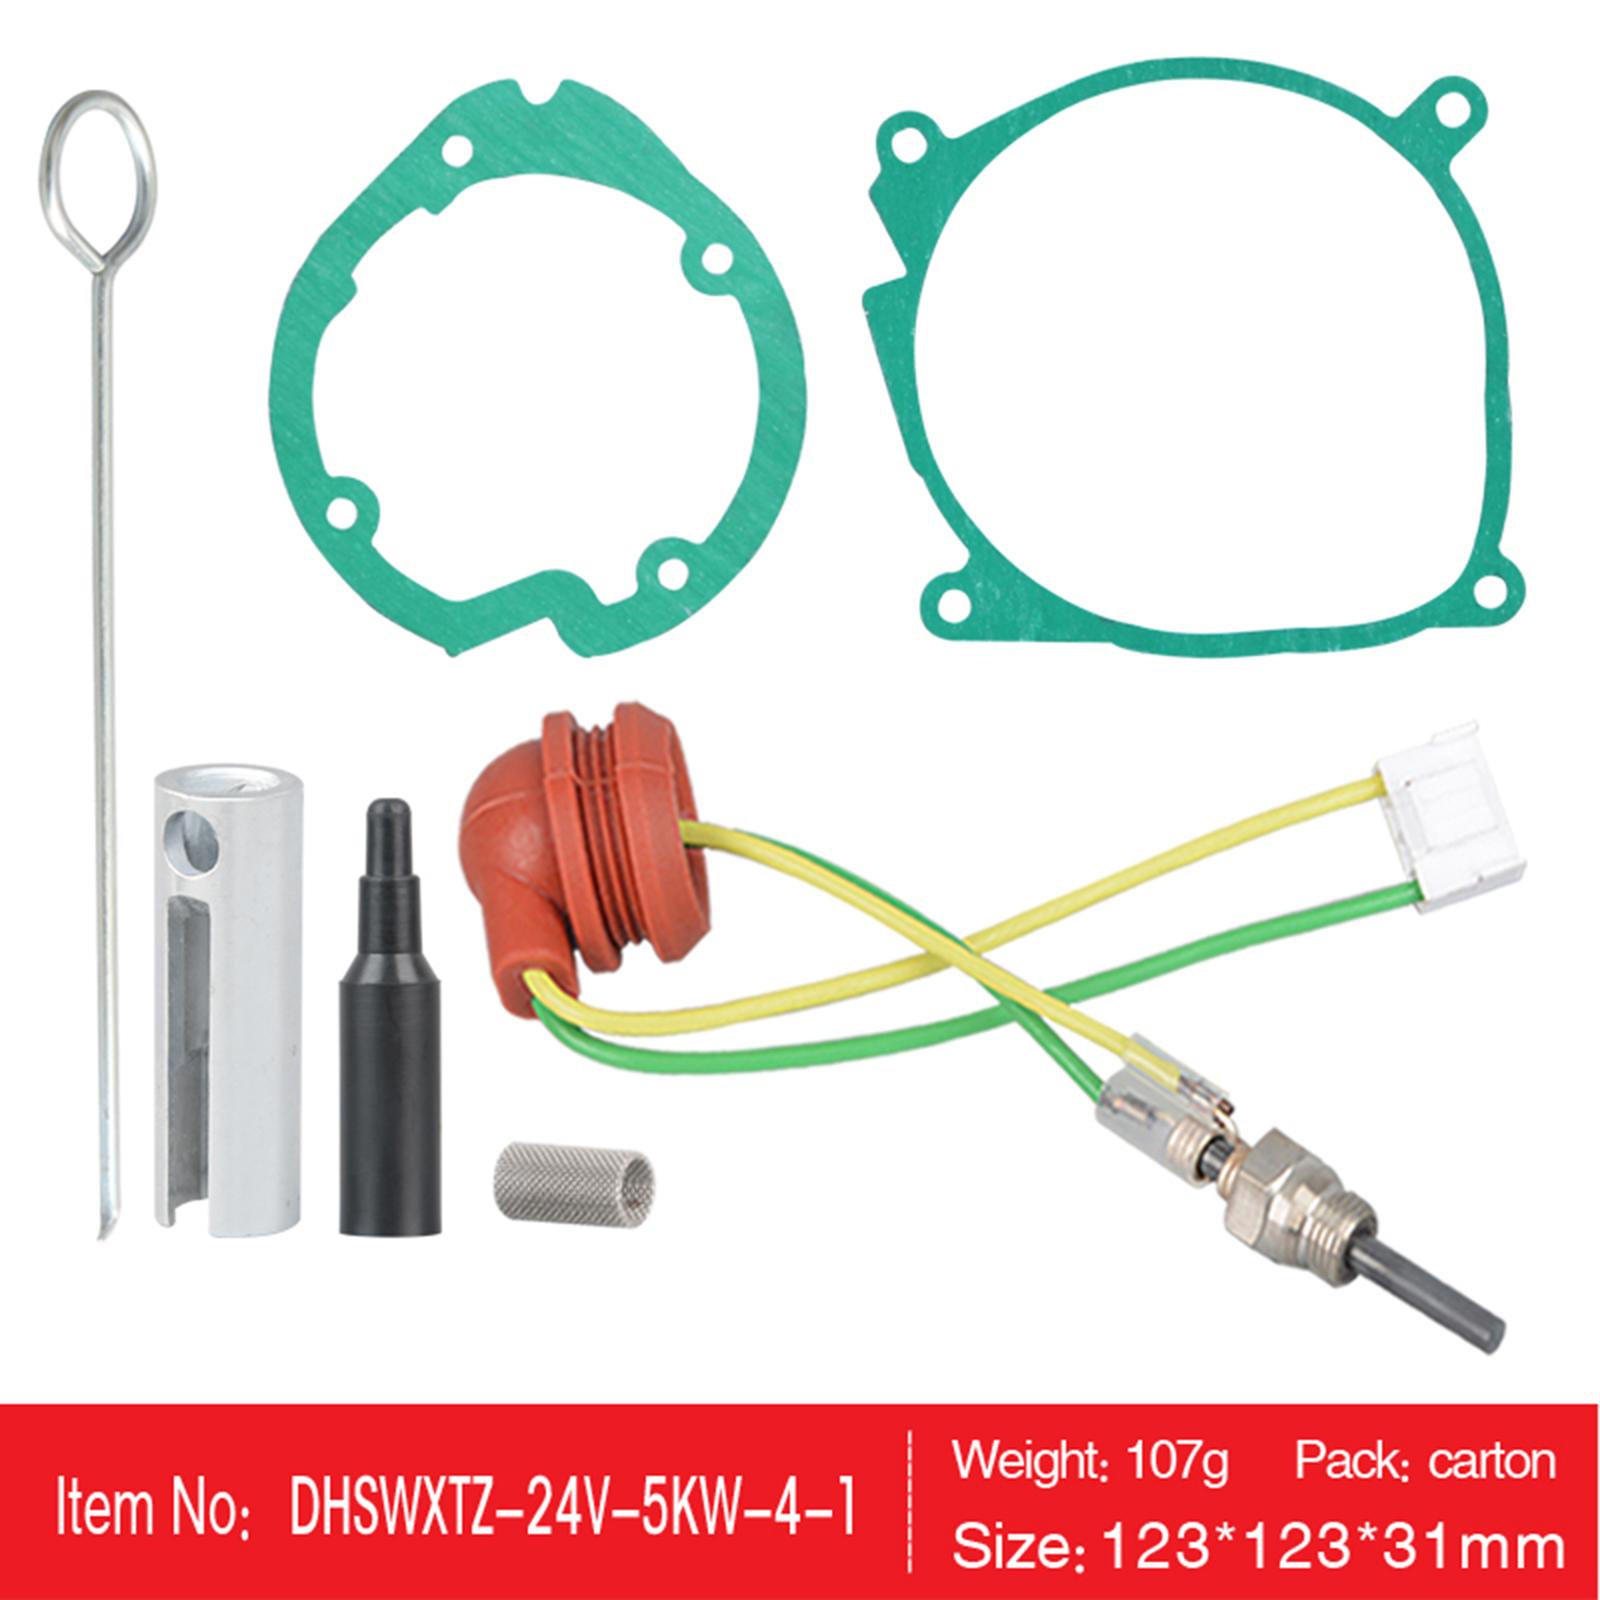 Glow Plug Repair Kit Maintenance Supplies for 24V 5kW Parking Heater